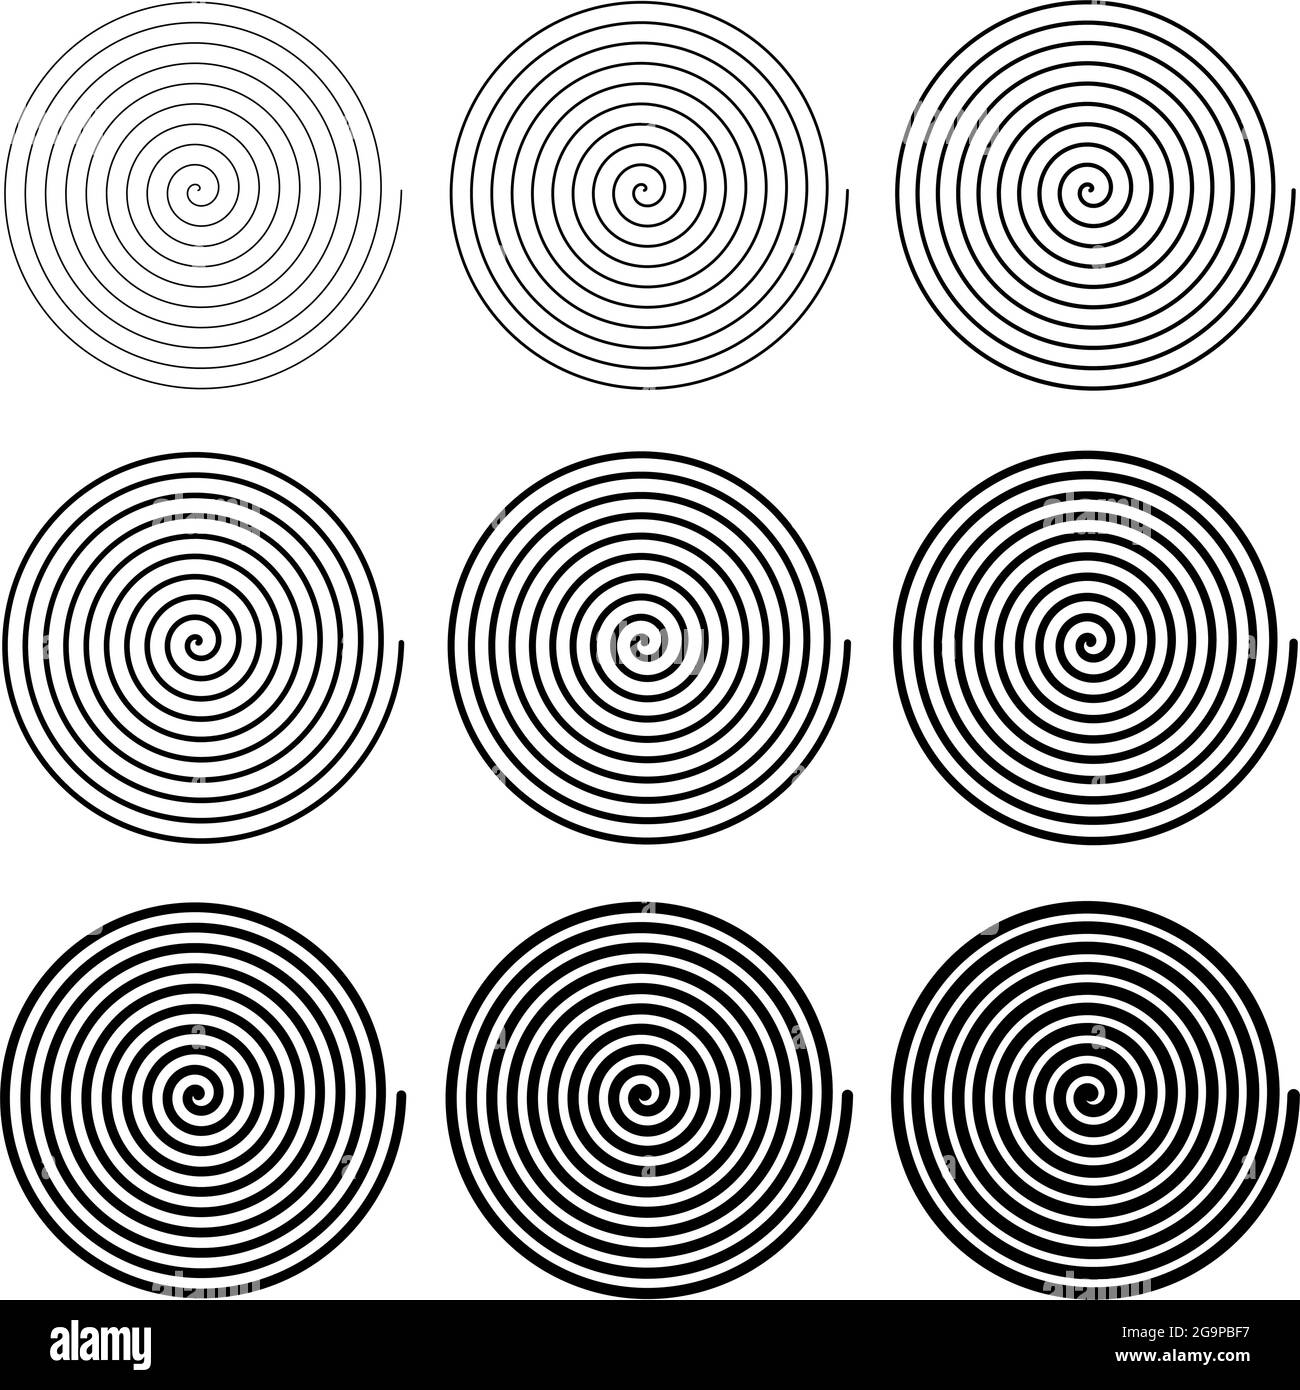 Archimedes, Archimedean spiral – stock vector illustration, clip-art  graphics Stock Vector Image & Art - Alamy